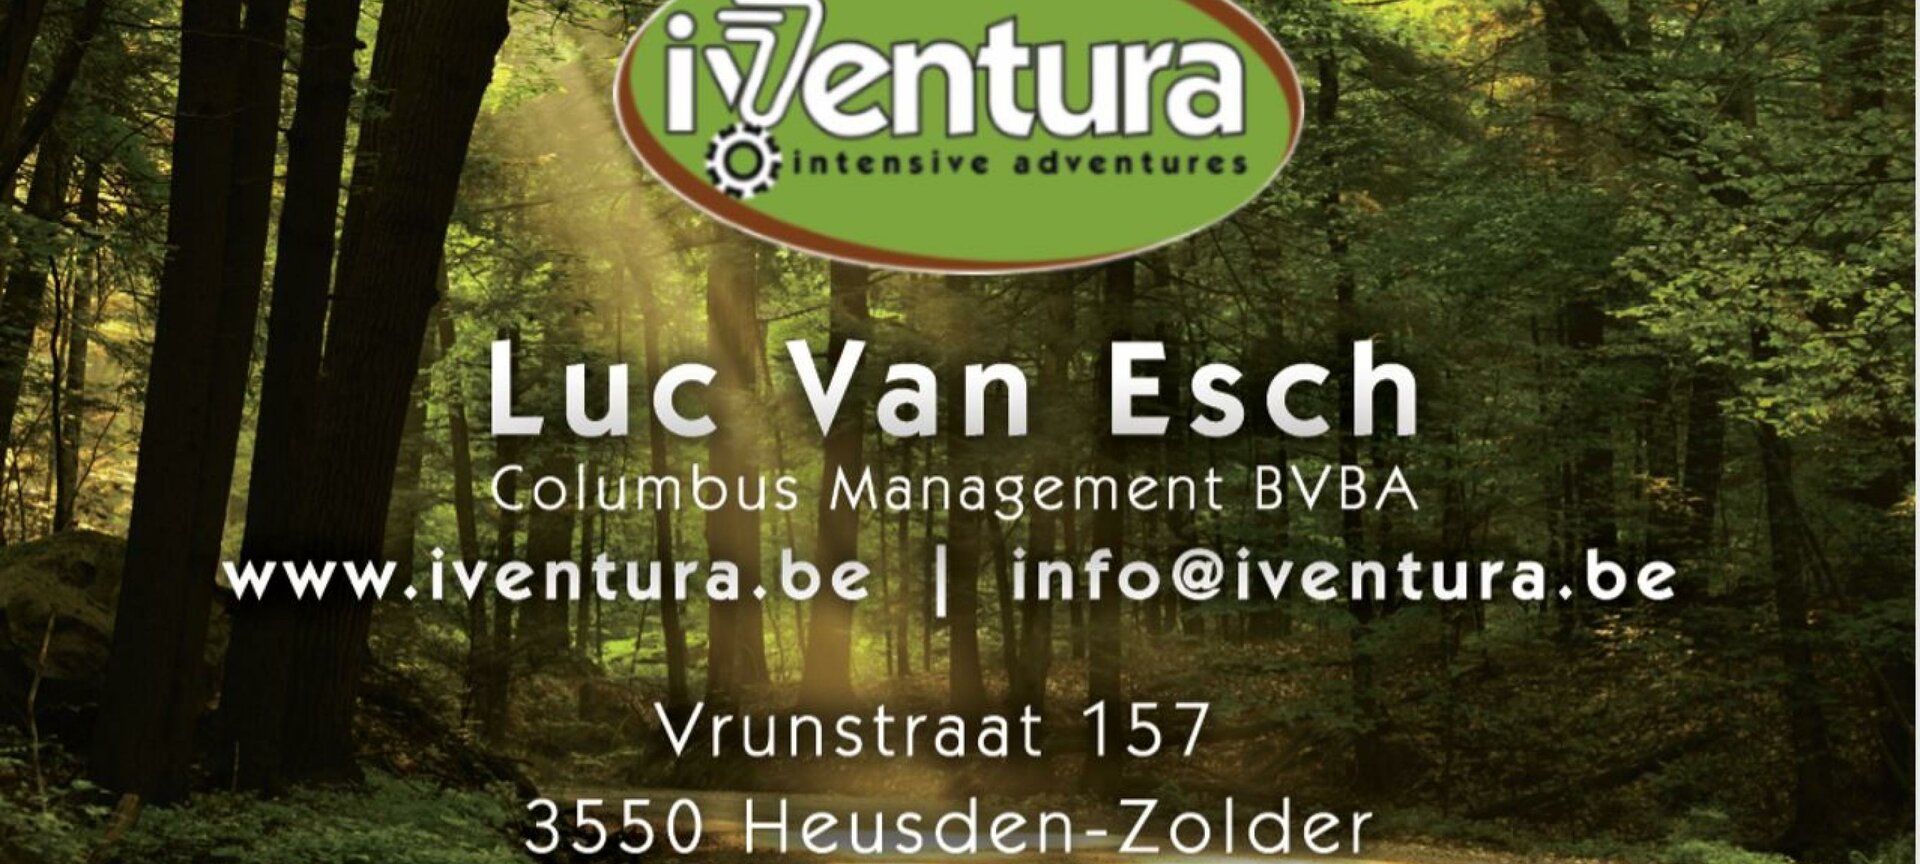 Iventura Intensive Adventures : Segway Limburg - Iventura Segway Limburg Contact